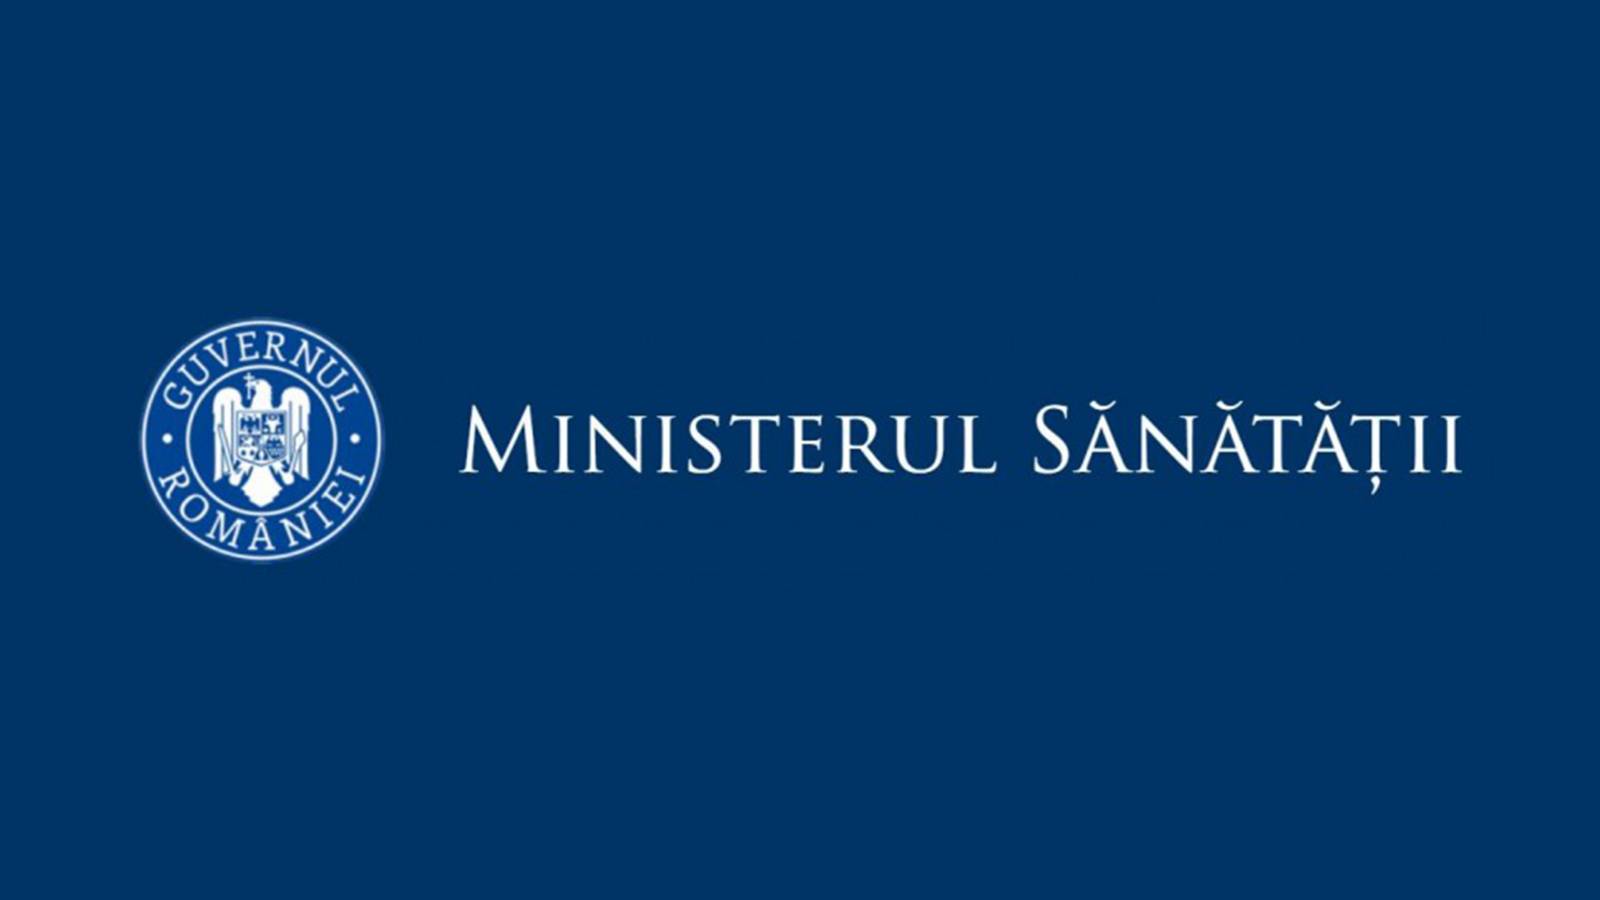 Ministerul Sanatatii judete lipsa cazuri noi 15 iulie 2021